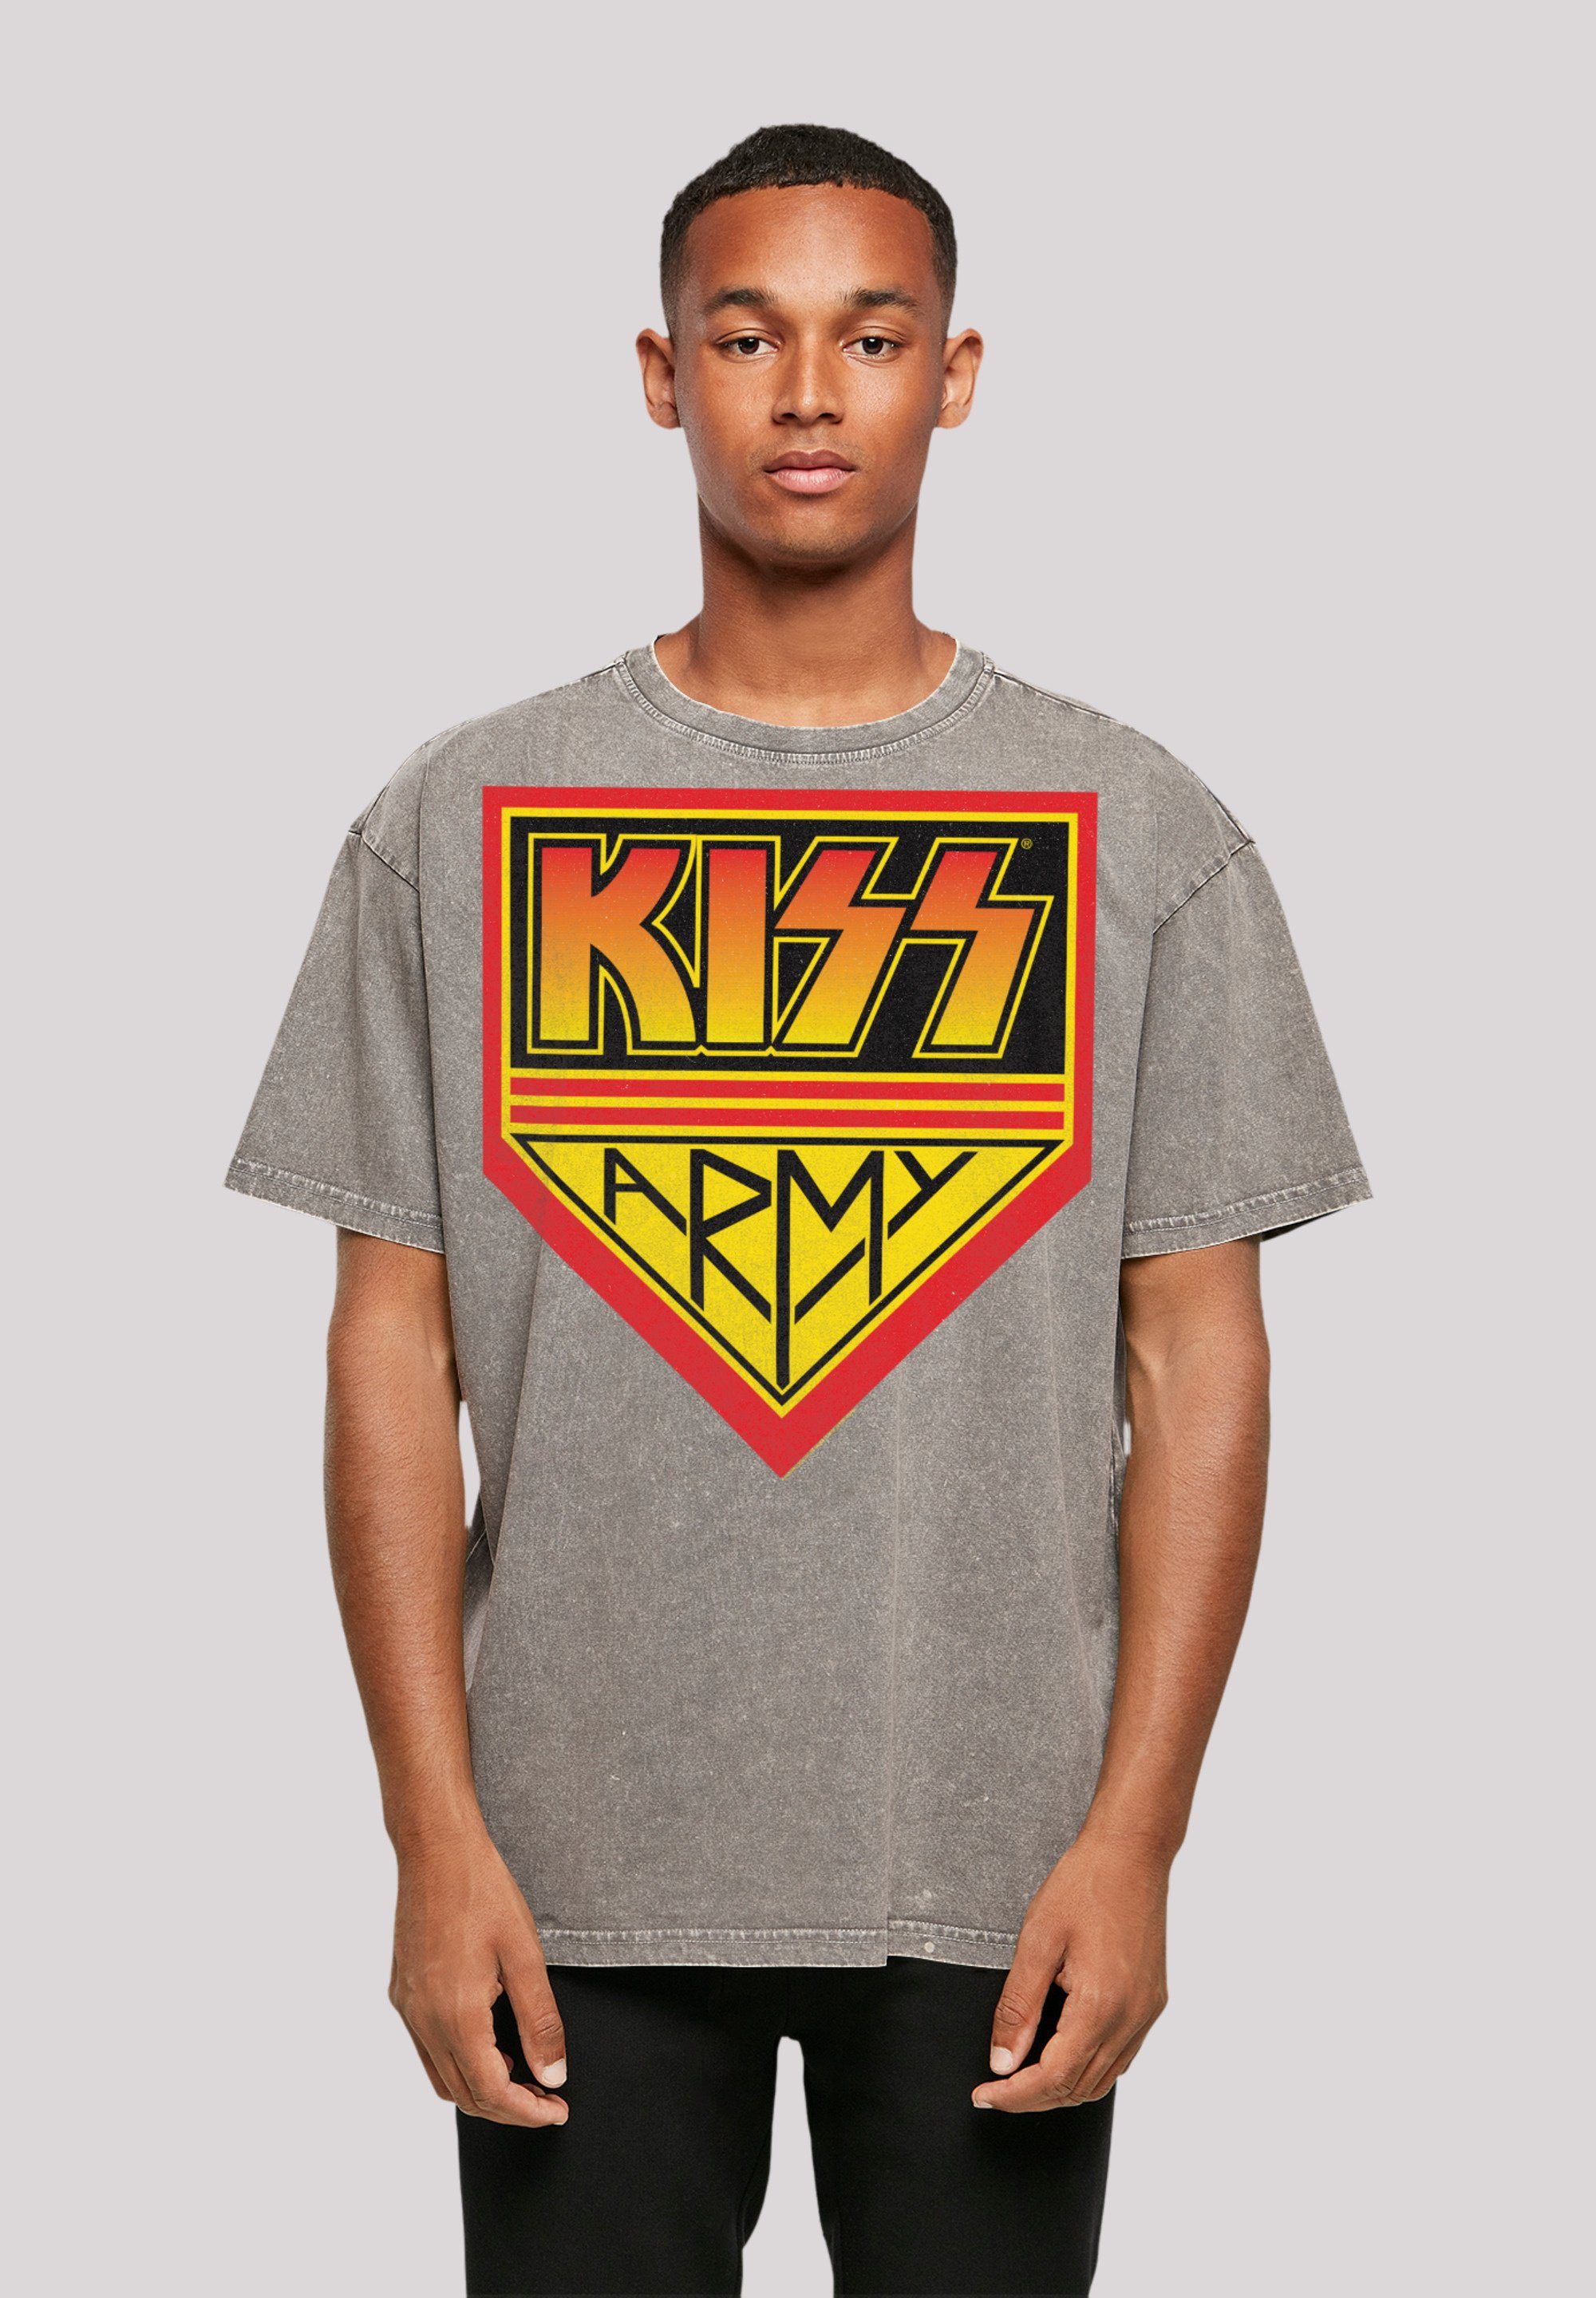 F4NT4STIC T-Shirt Kiss Rock Asphalt Rock Army Band By Qualität, Off Premium Logo Musik